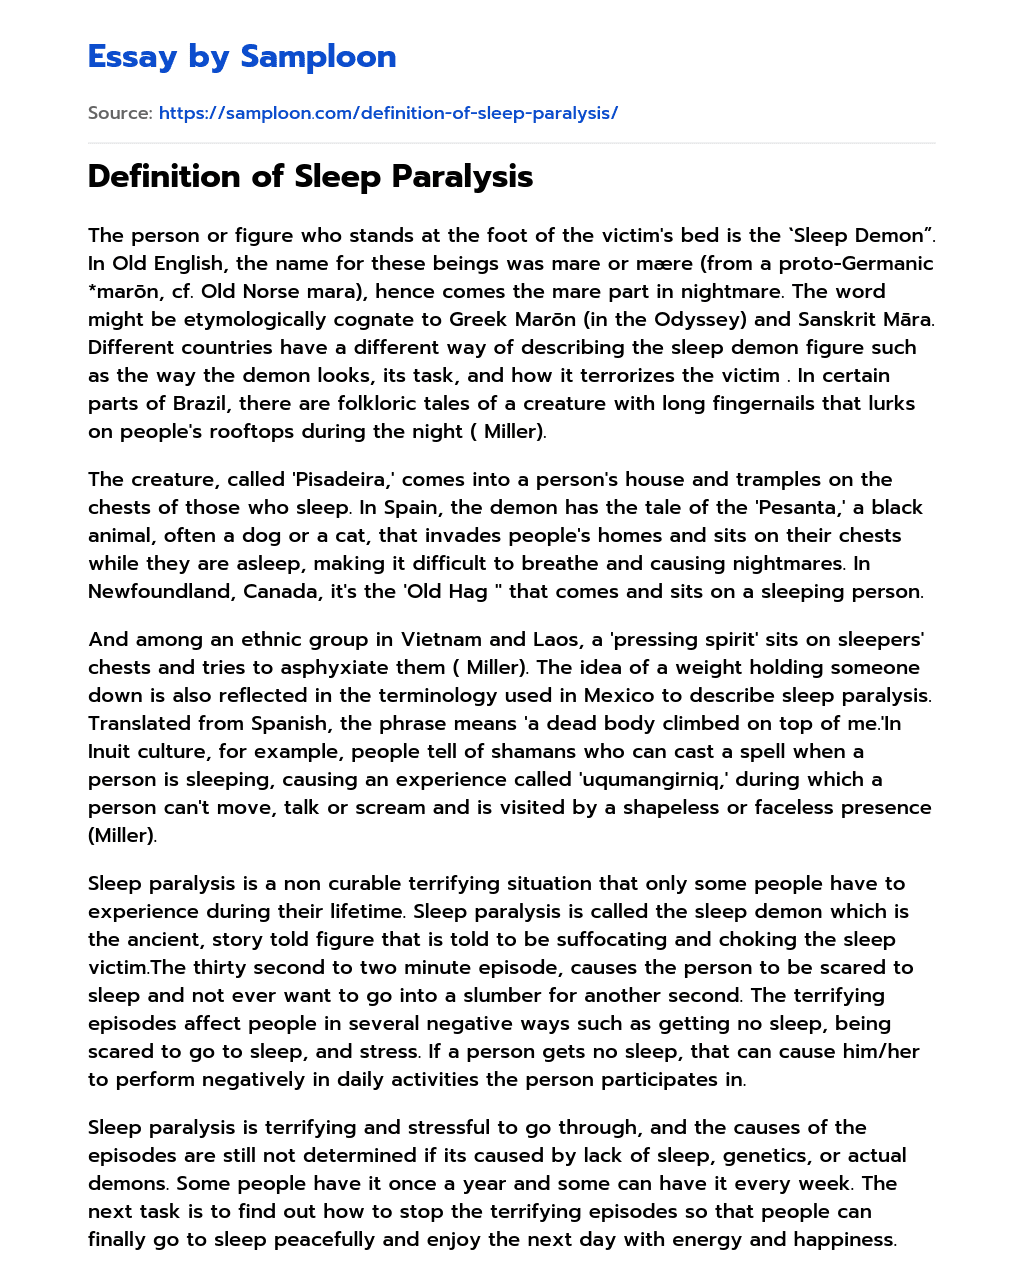 Definition of Sleep Paralysis essay